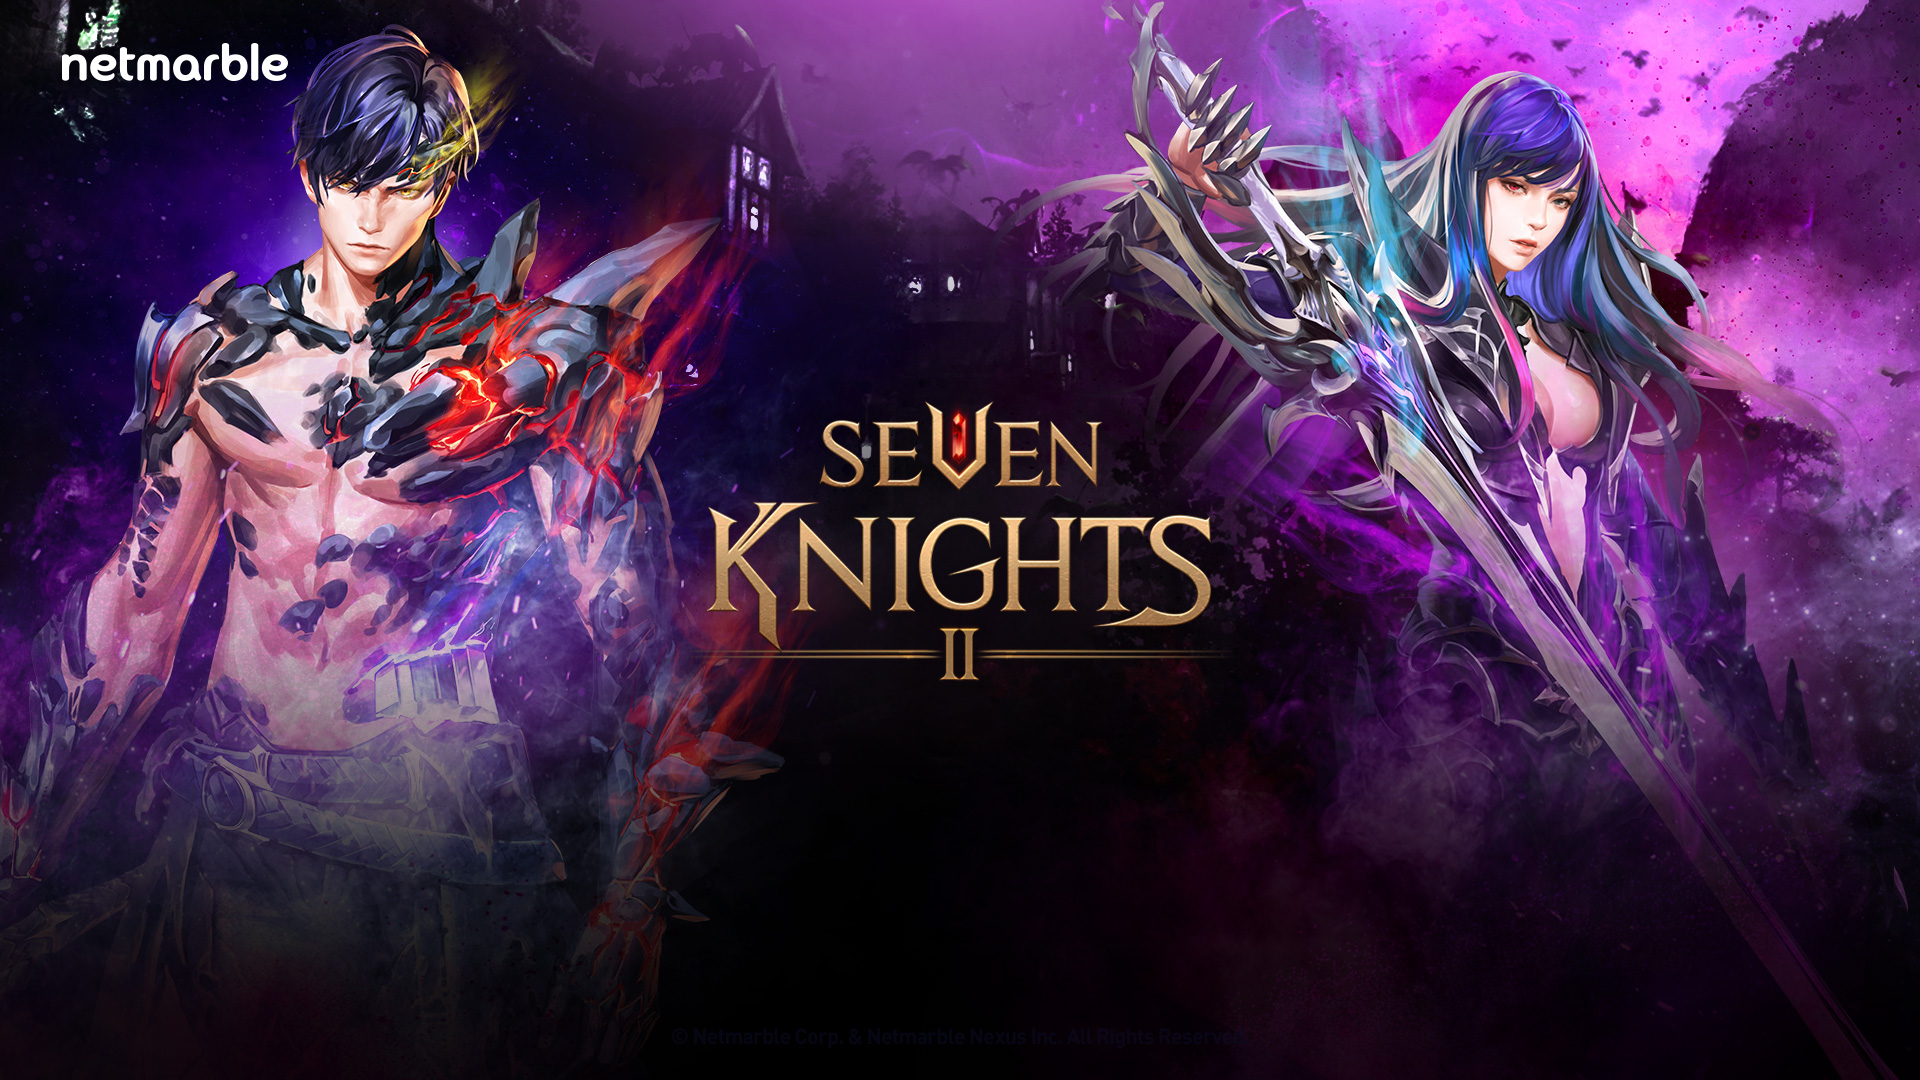 Seven Knights 2 - Netmarble